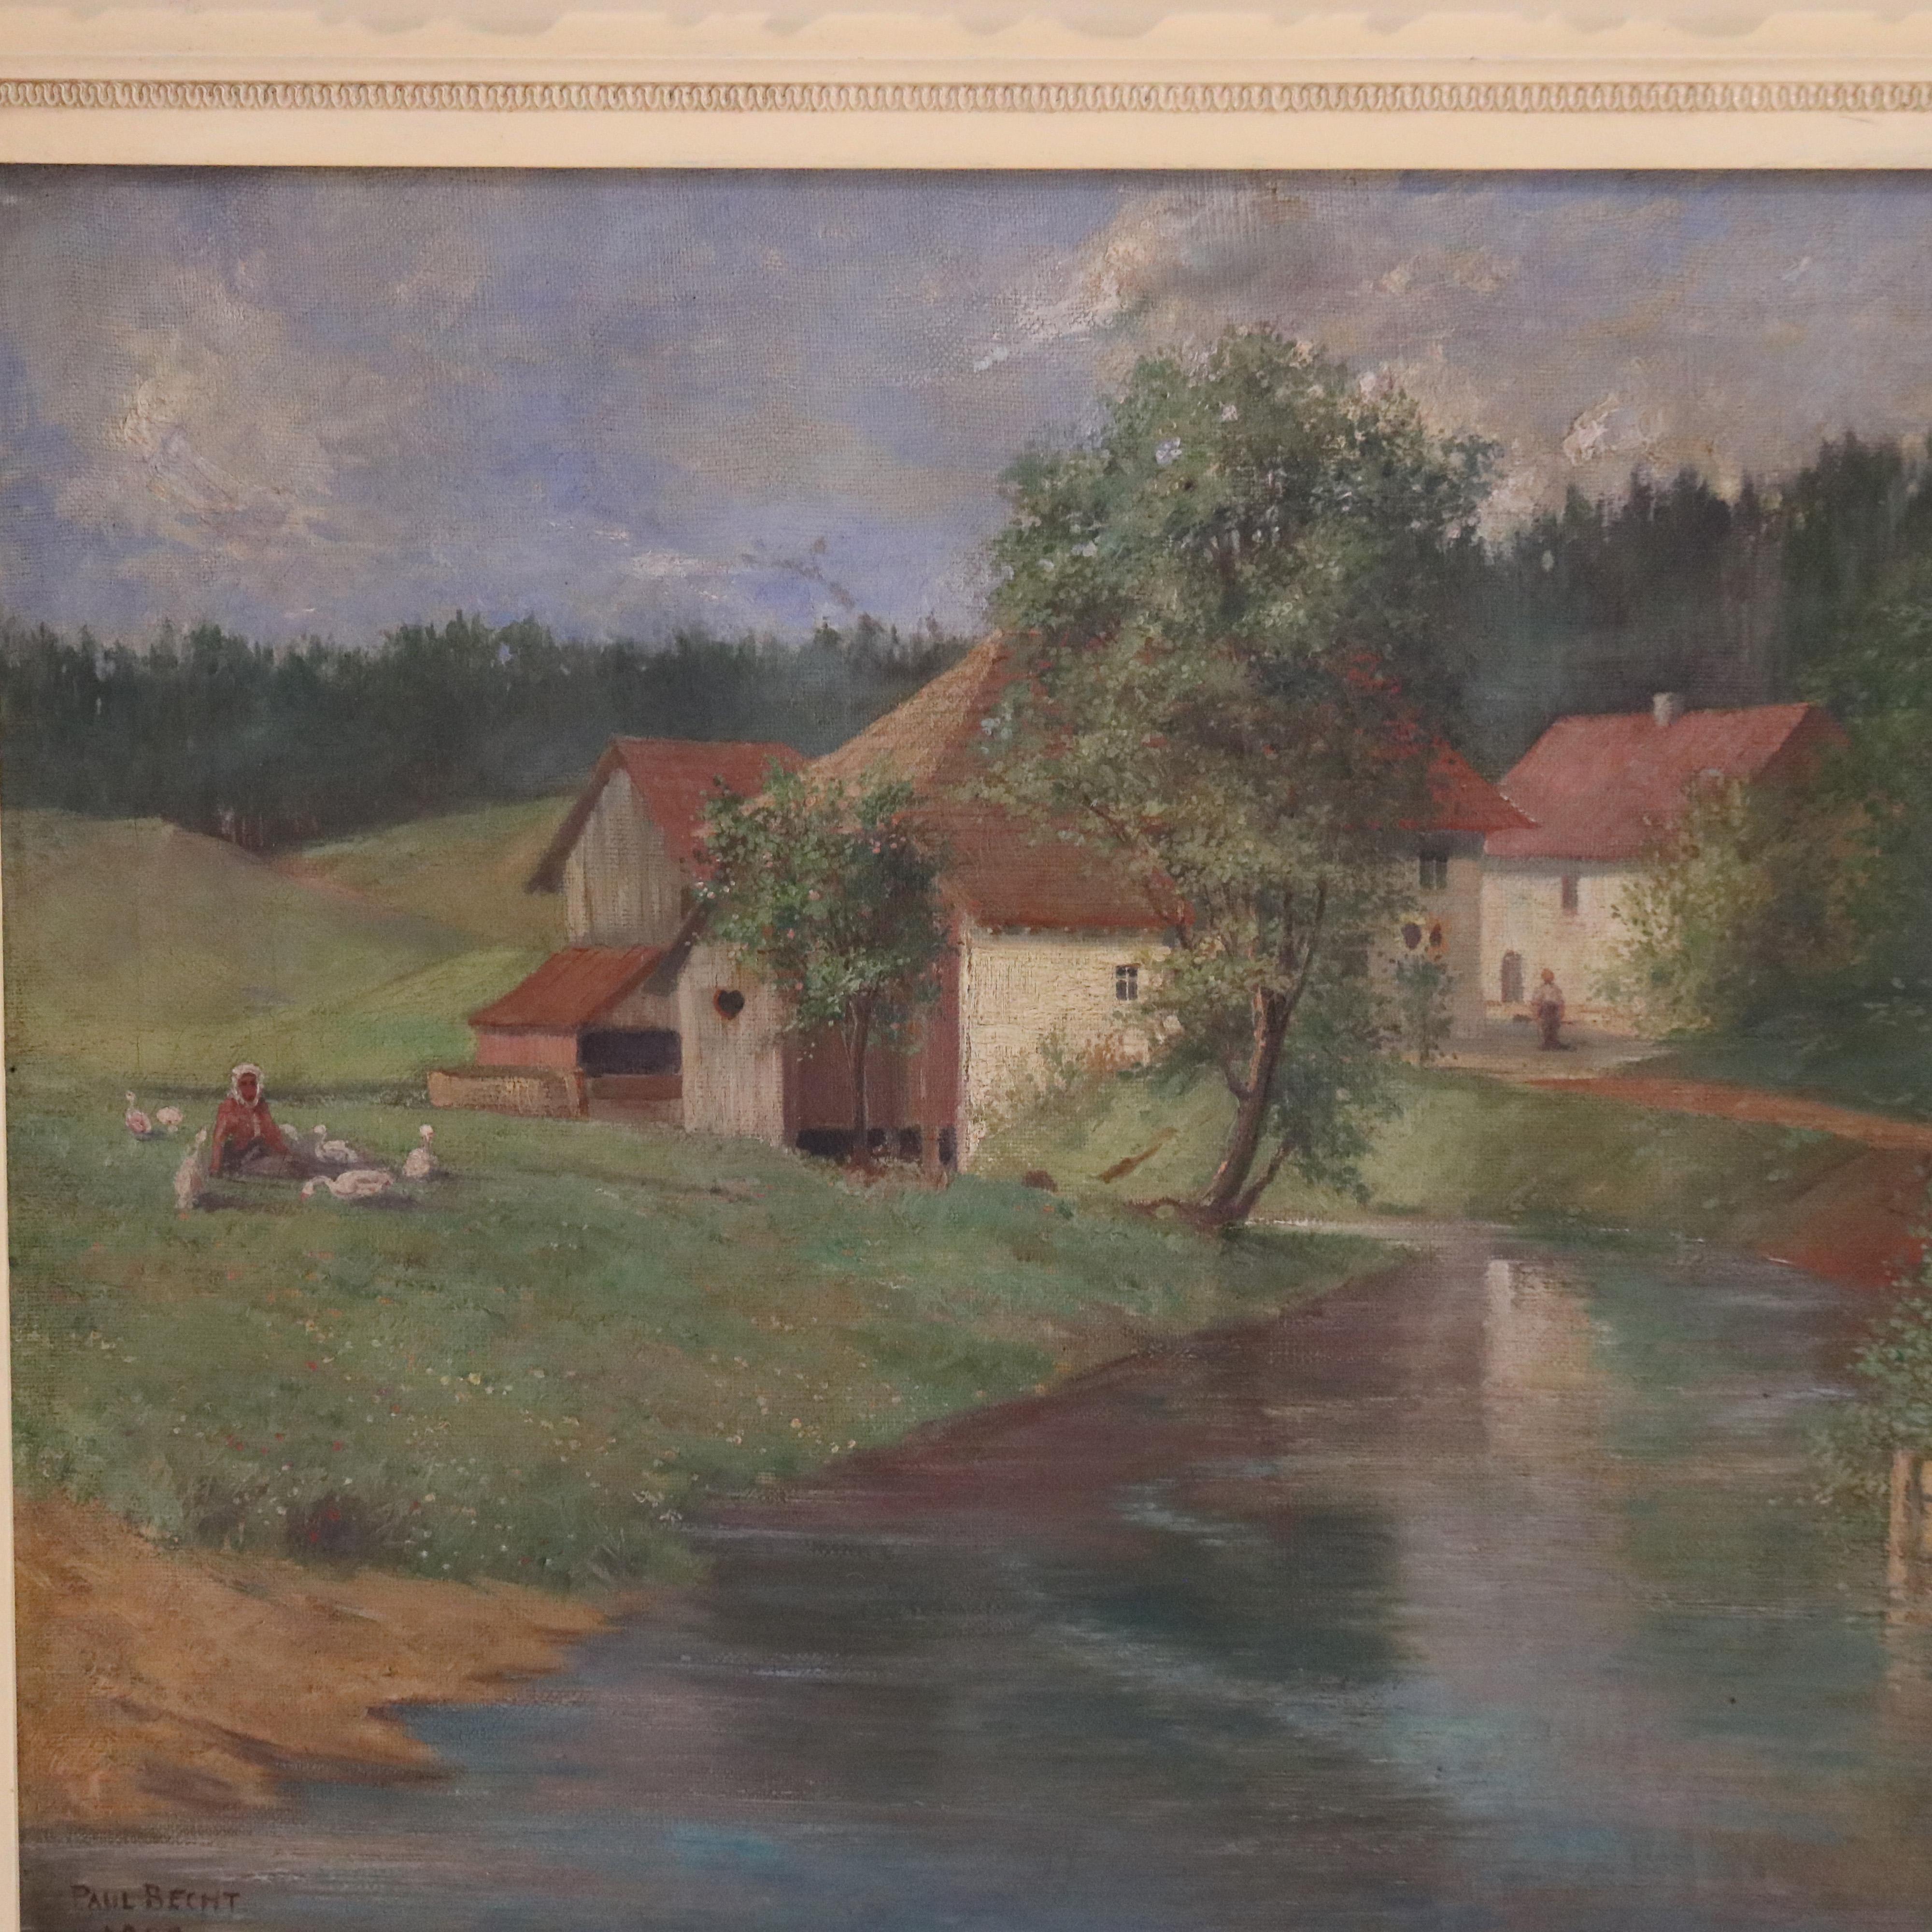 Painted Antique Oil on Canvas Landscape Painting, Farm Scene, Signed Brecht, 1907 For Sale